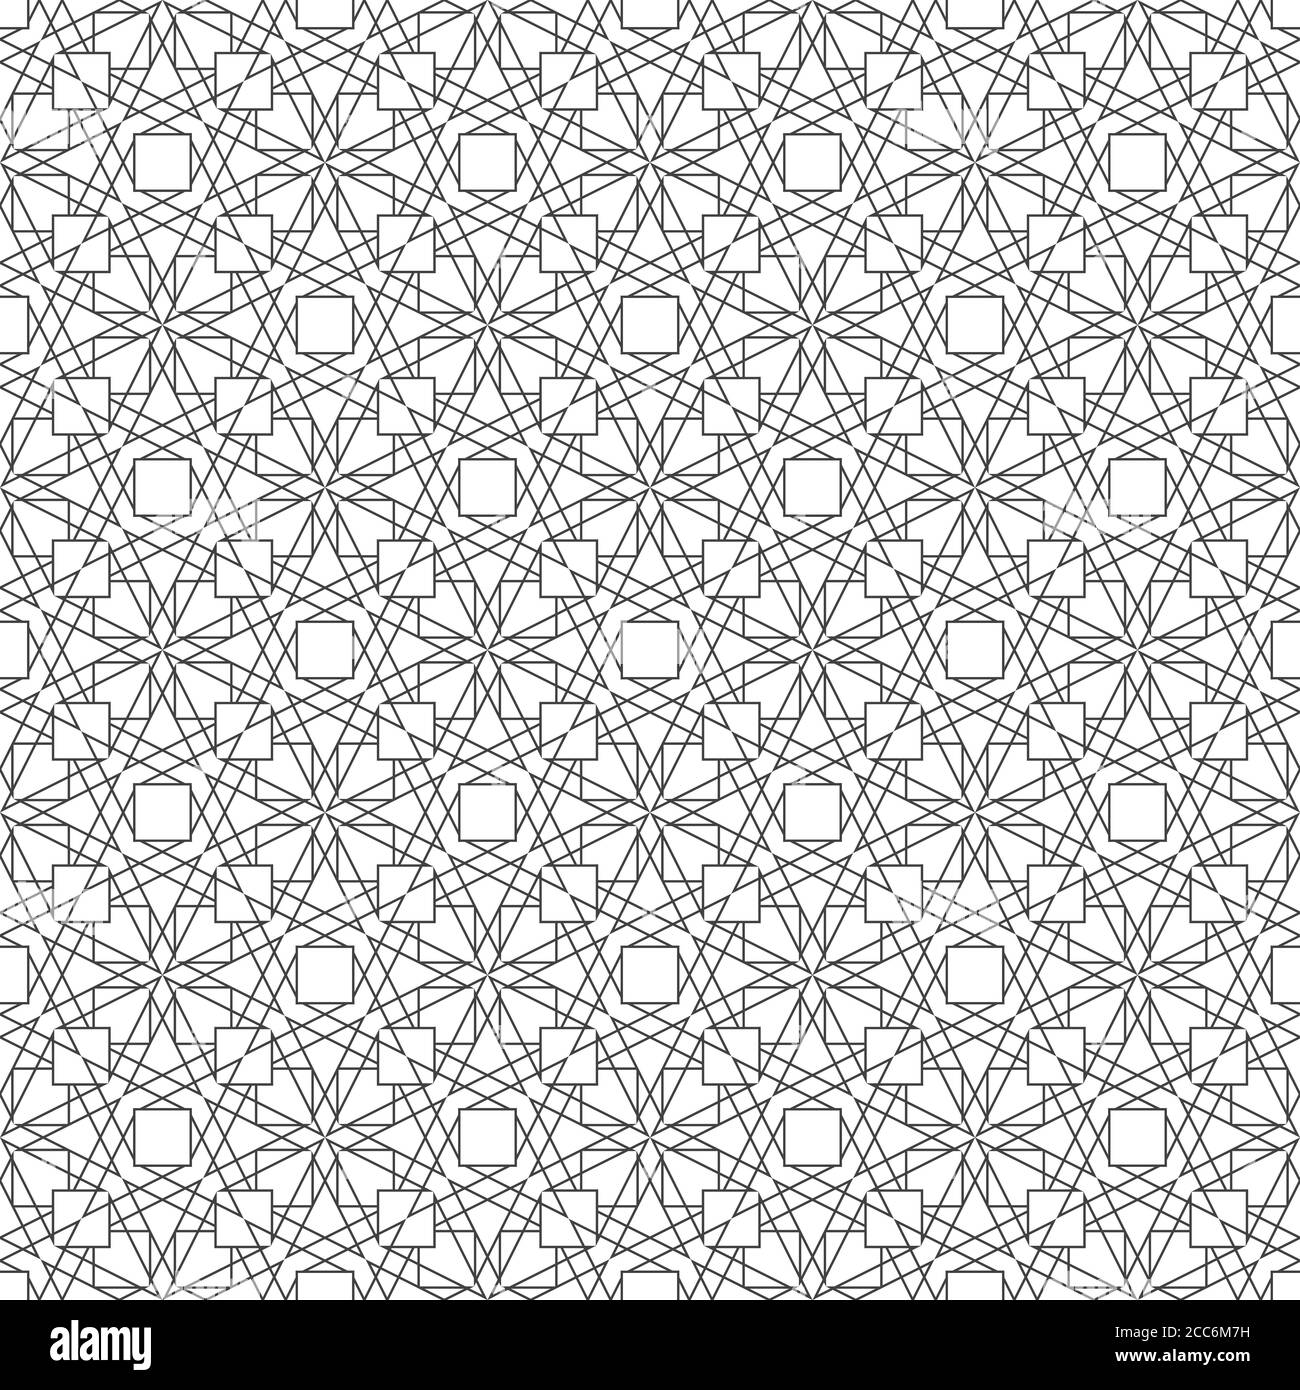 Seamless pattern. Abstract geometric background. Original linear ...